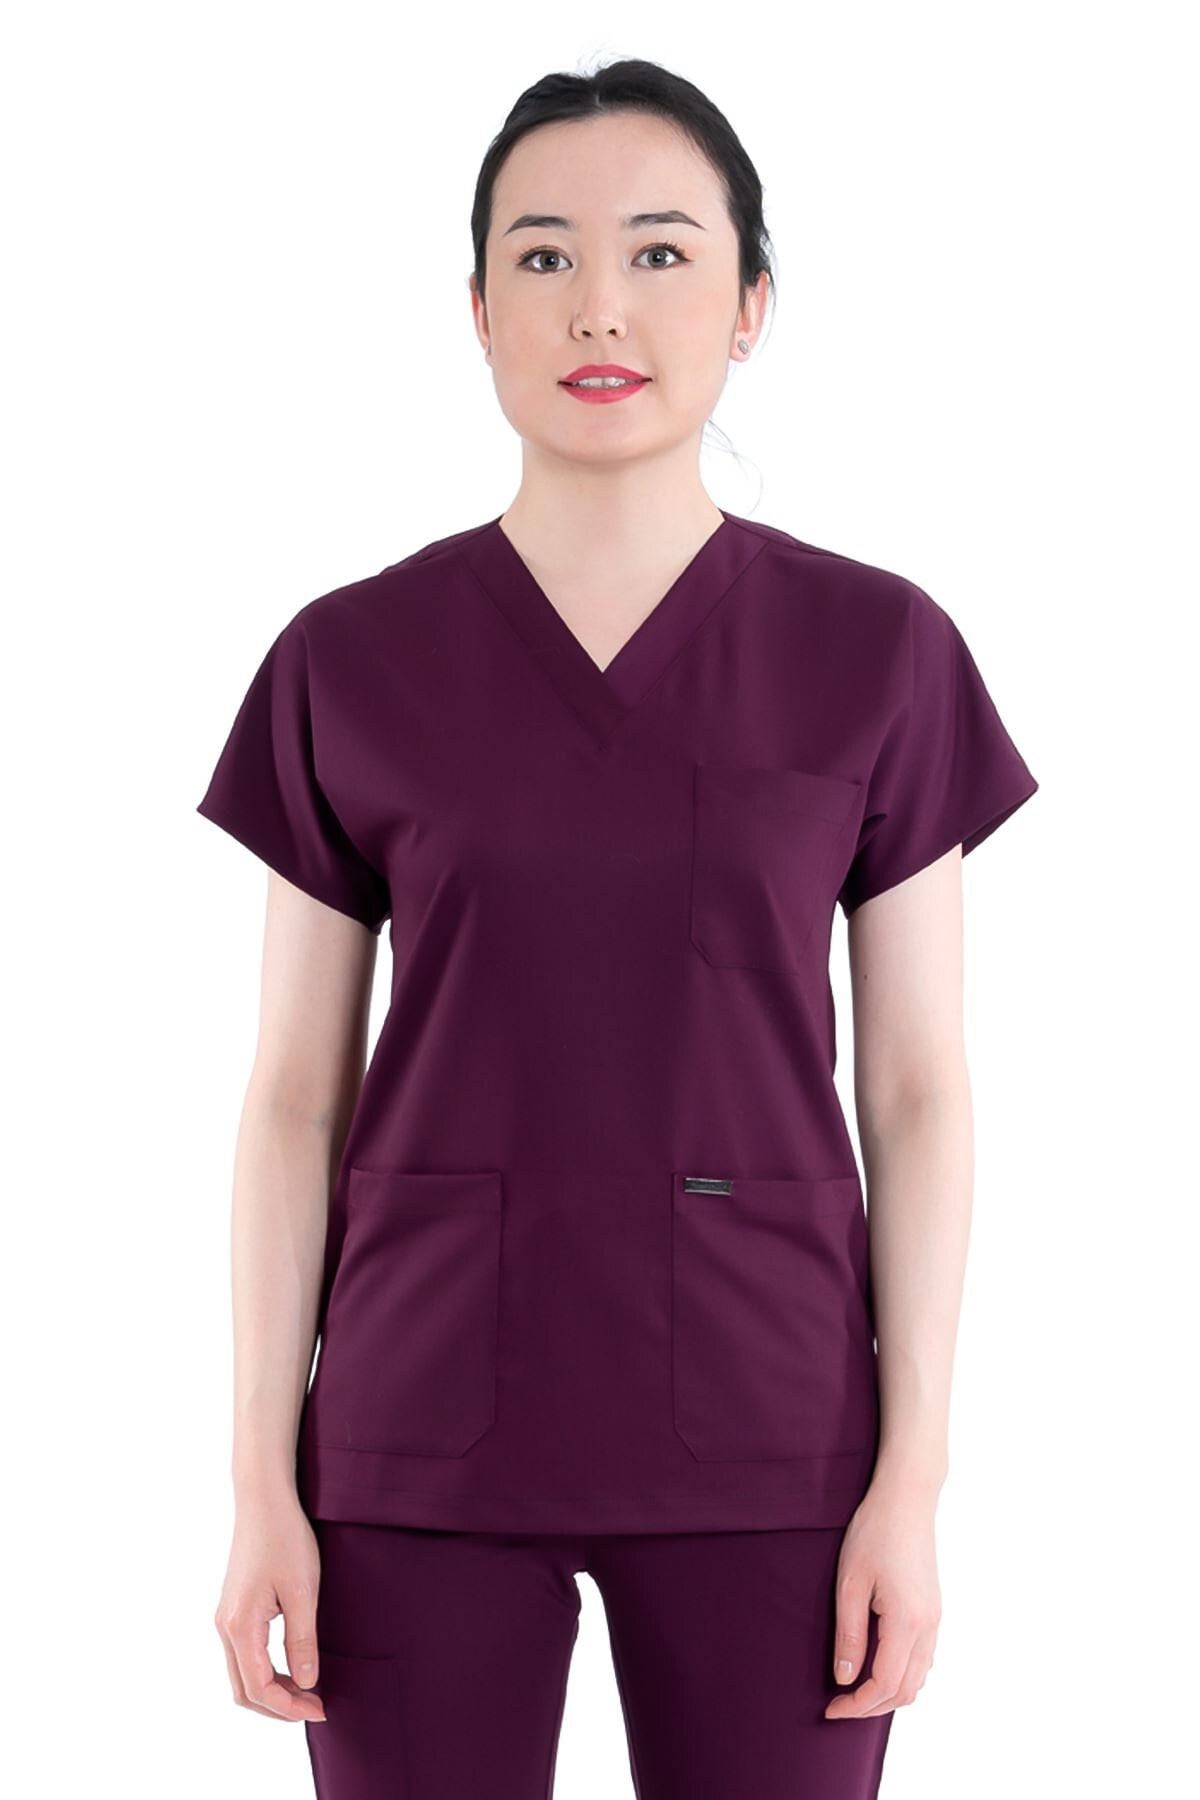 Cute Purple Nurse Uniform High Quality 100% Cotton / ABDL Nurse / Scrubs /  Nurse Dress With Short Sleeves Nurse Cap -  Canada